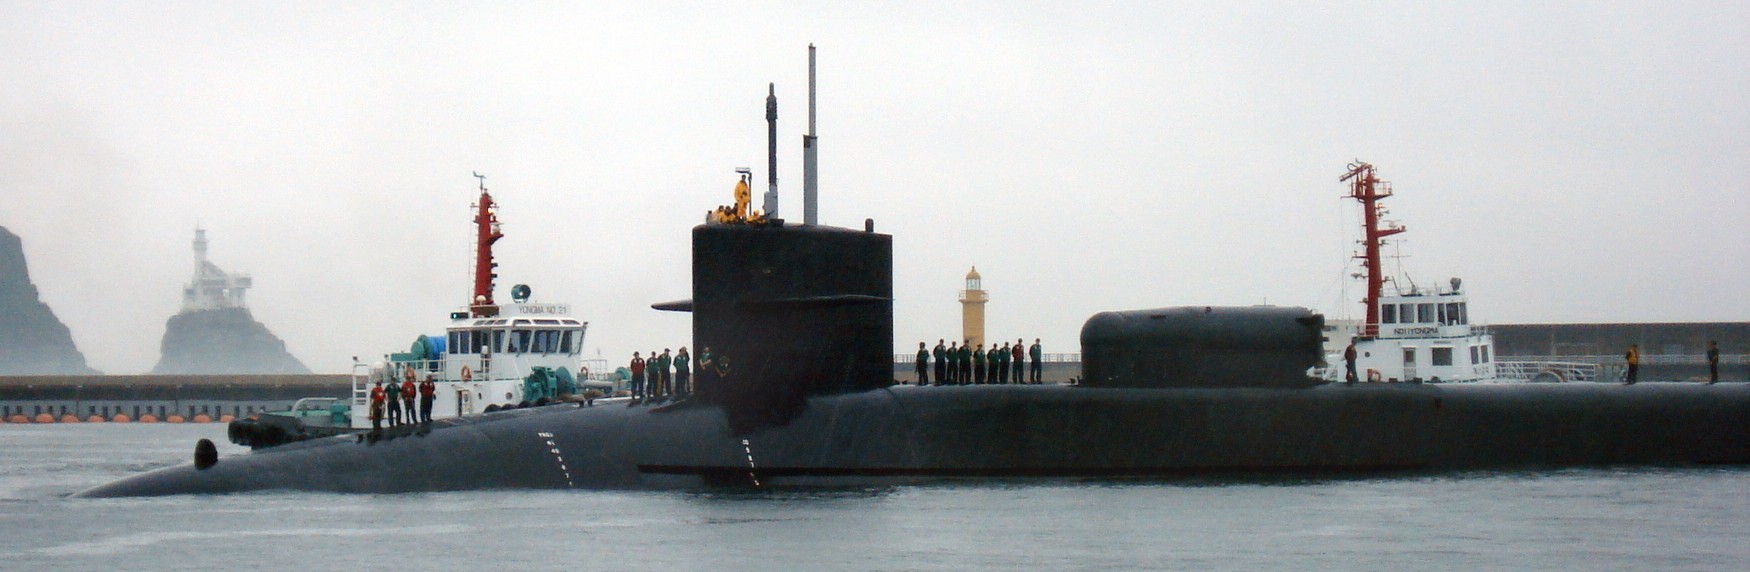 ssgn-727 uss michigan guided missile submarine 2010 27 busan korea